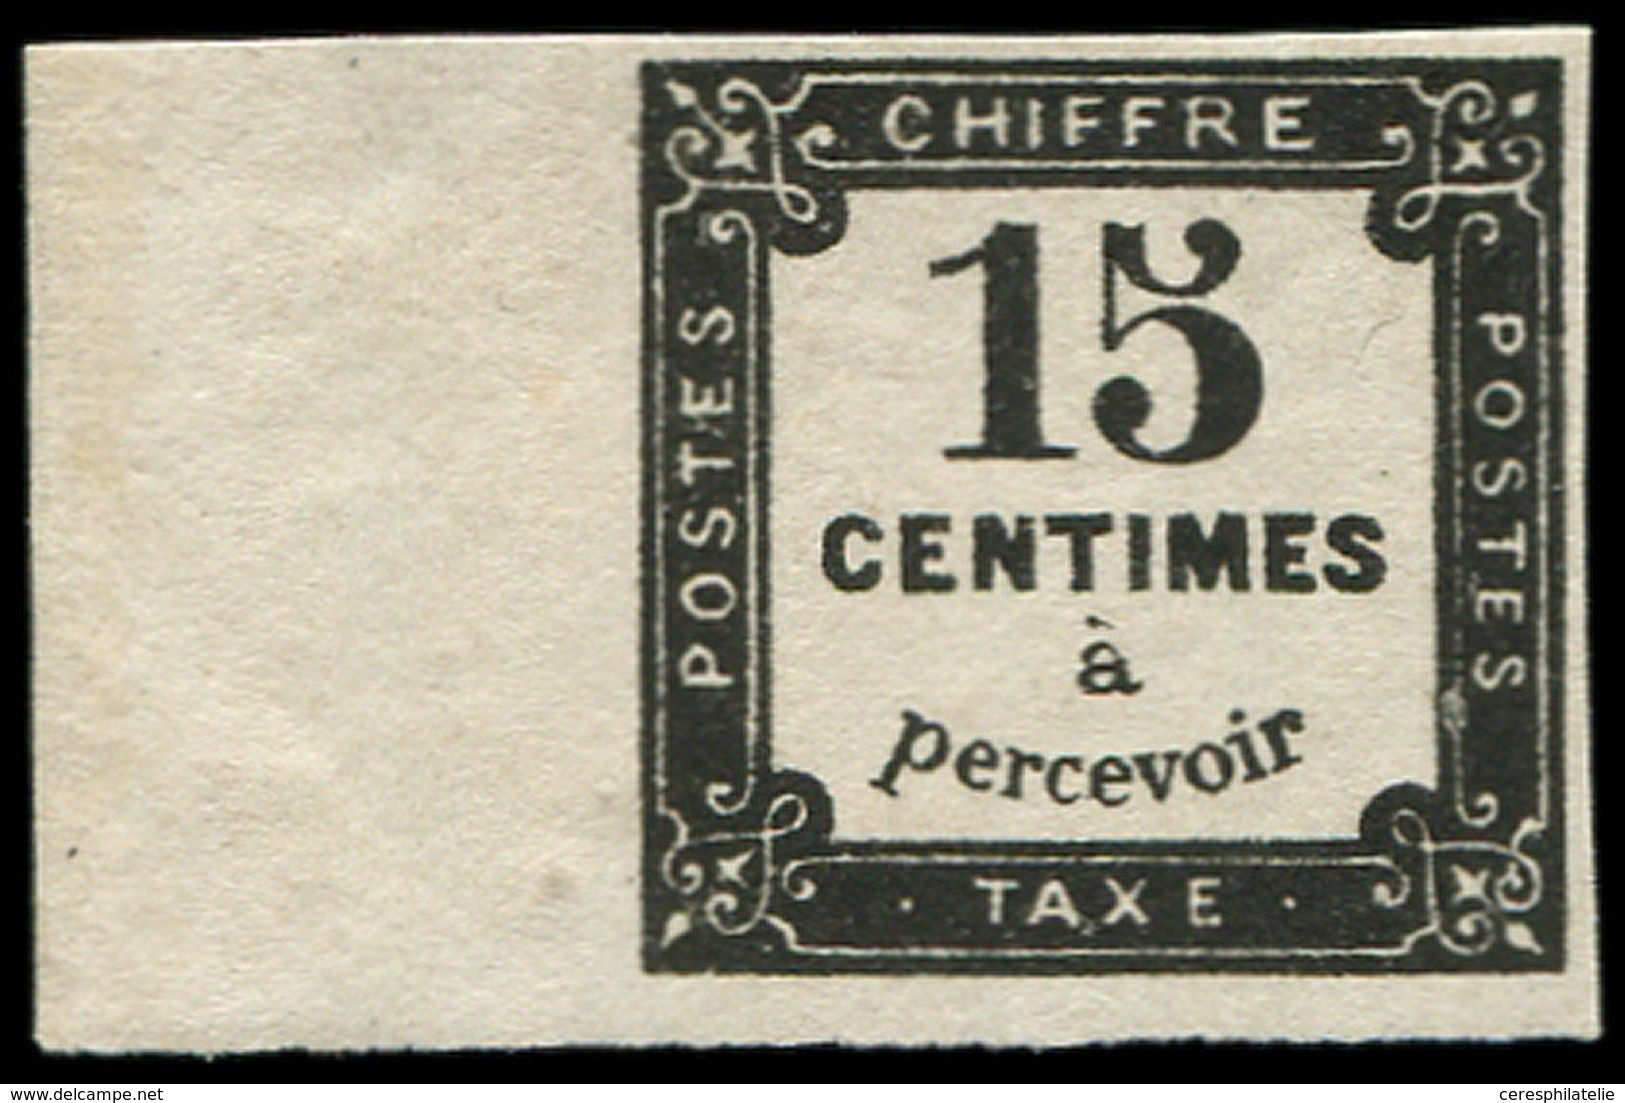 * TAXE - 4   15c. Noir Litho, Bdf, Inf. Ch., TB - 1859-1959 Usati